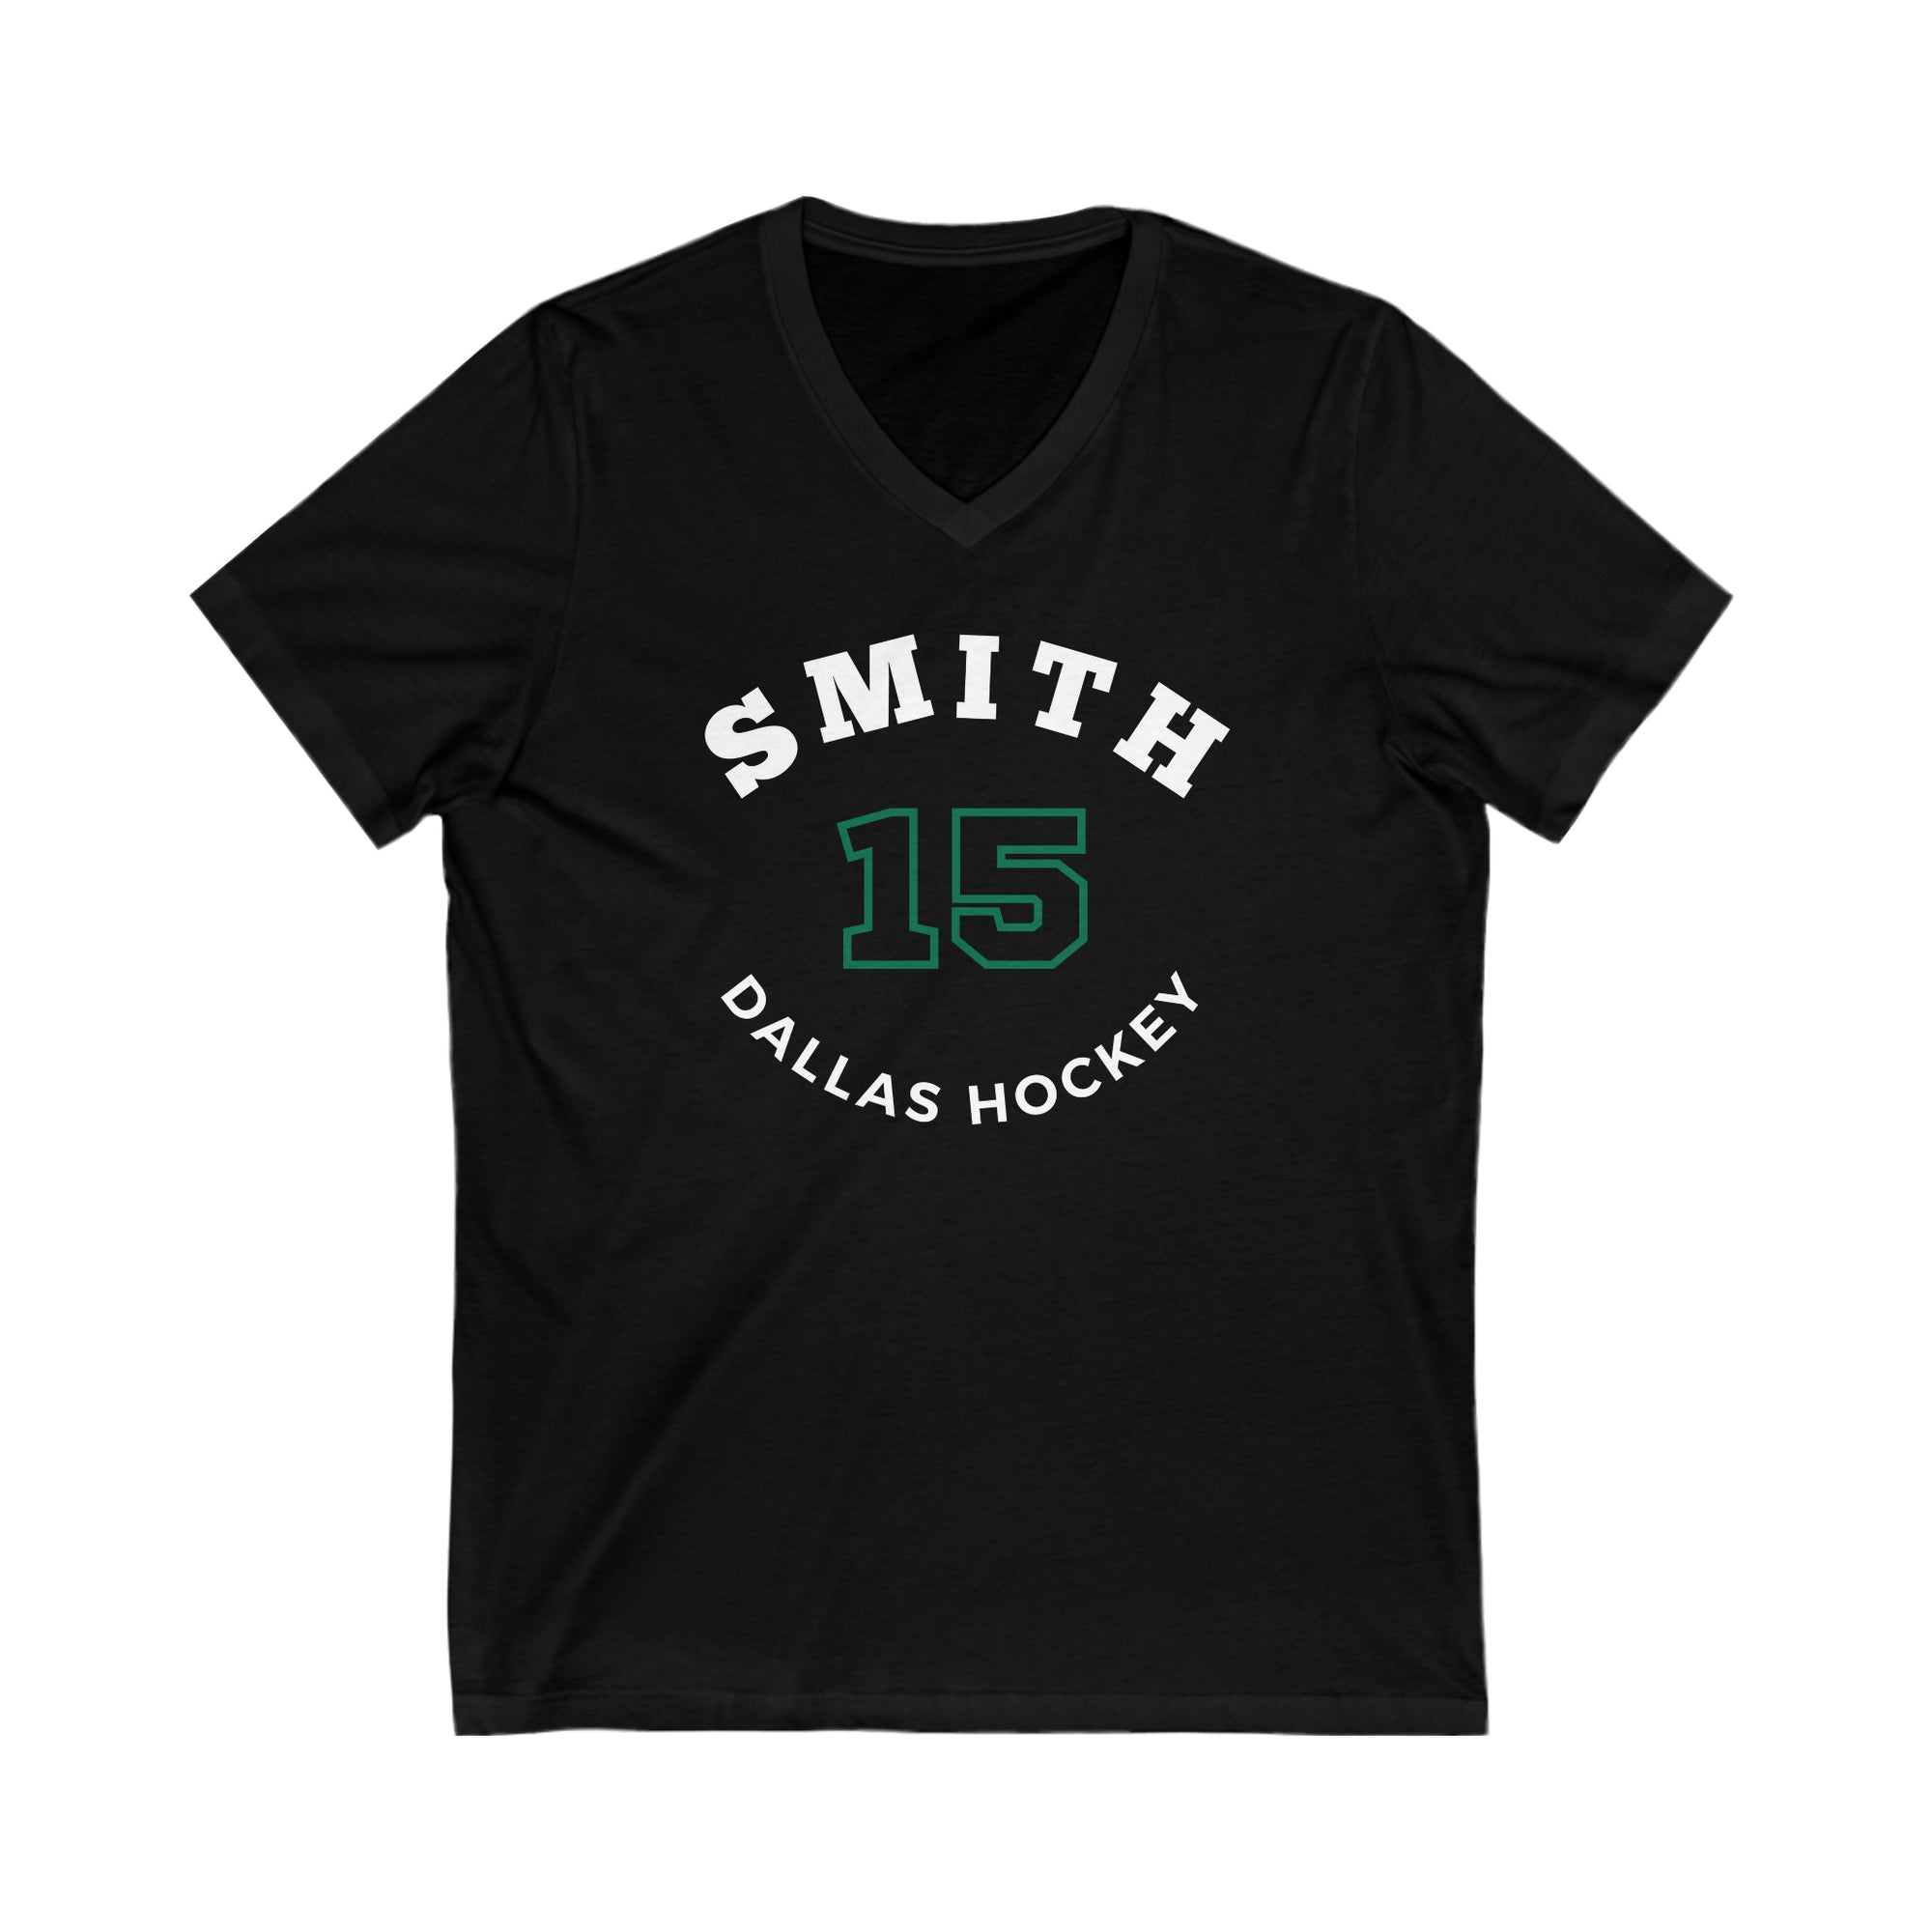 Smith 15 Dallas Hockey Number Arch Design Unisex V-Neck Tee